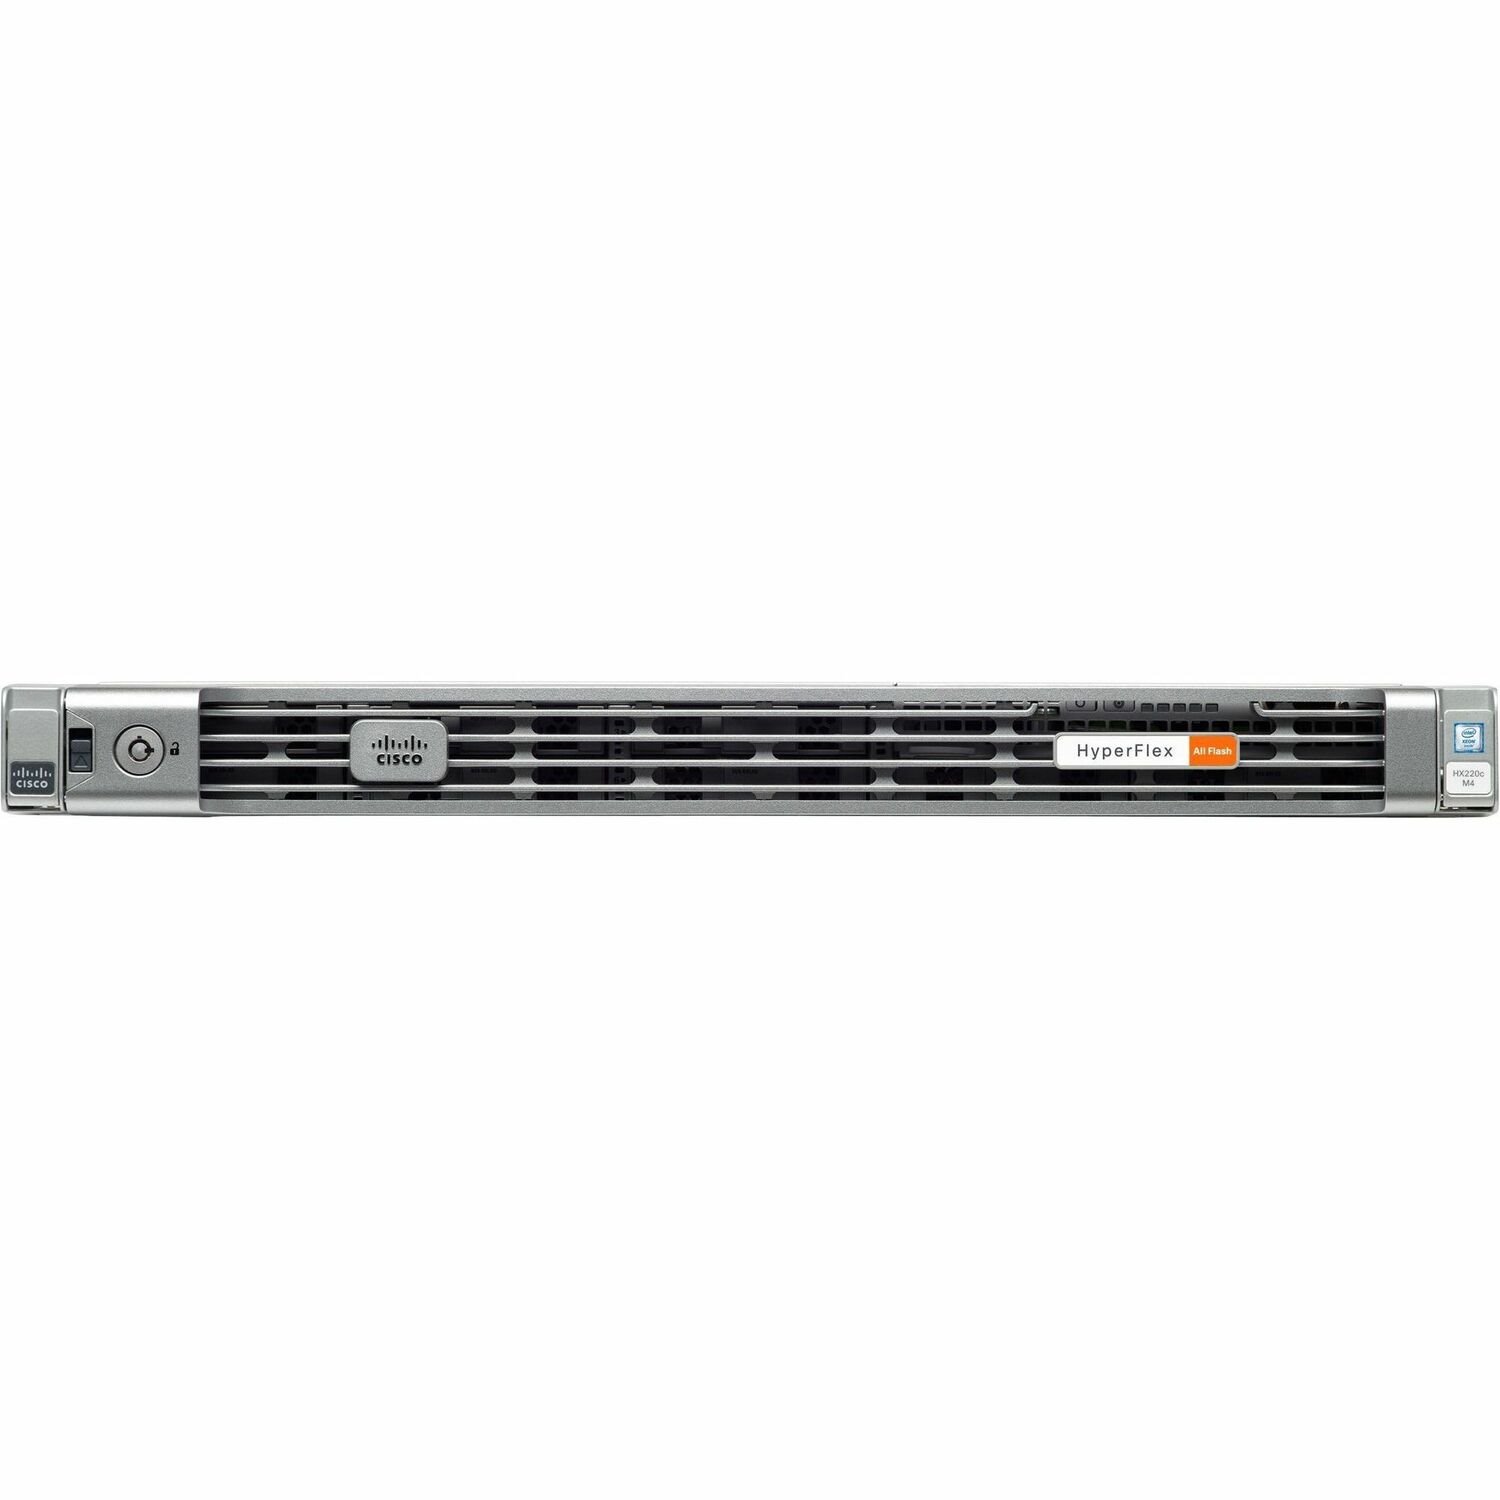 Cisco HyperFlex HX220c M4 1U Rack Server - 2 x Intel Xeon E5-2630 v4 2.20 GHz - 256 GB RAM - 12Gb/s SAS Controller